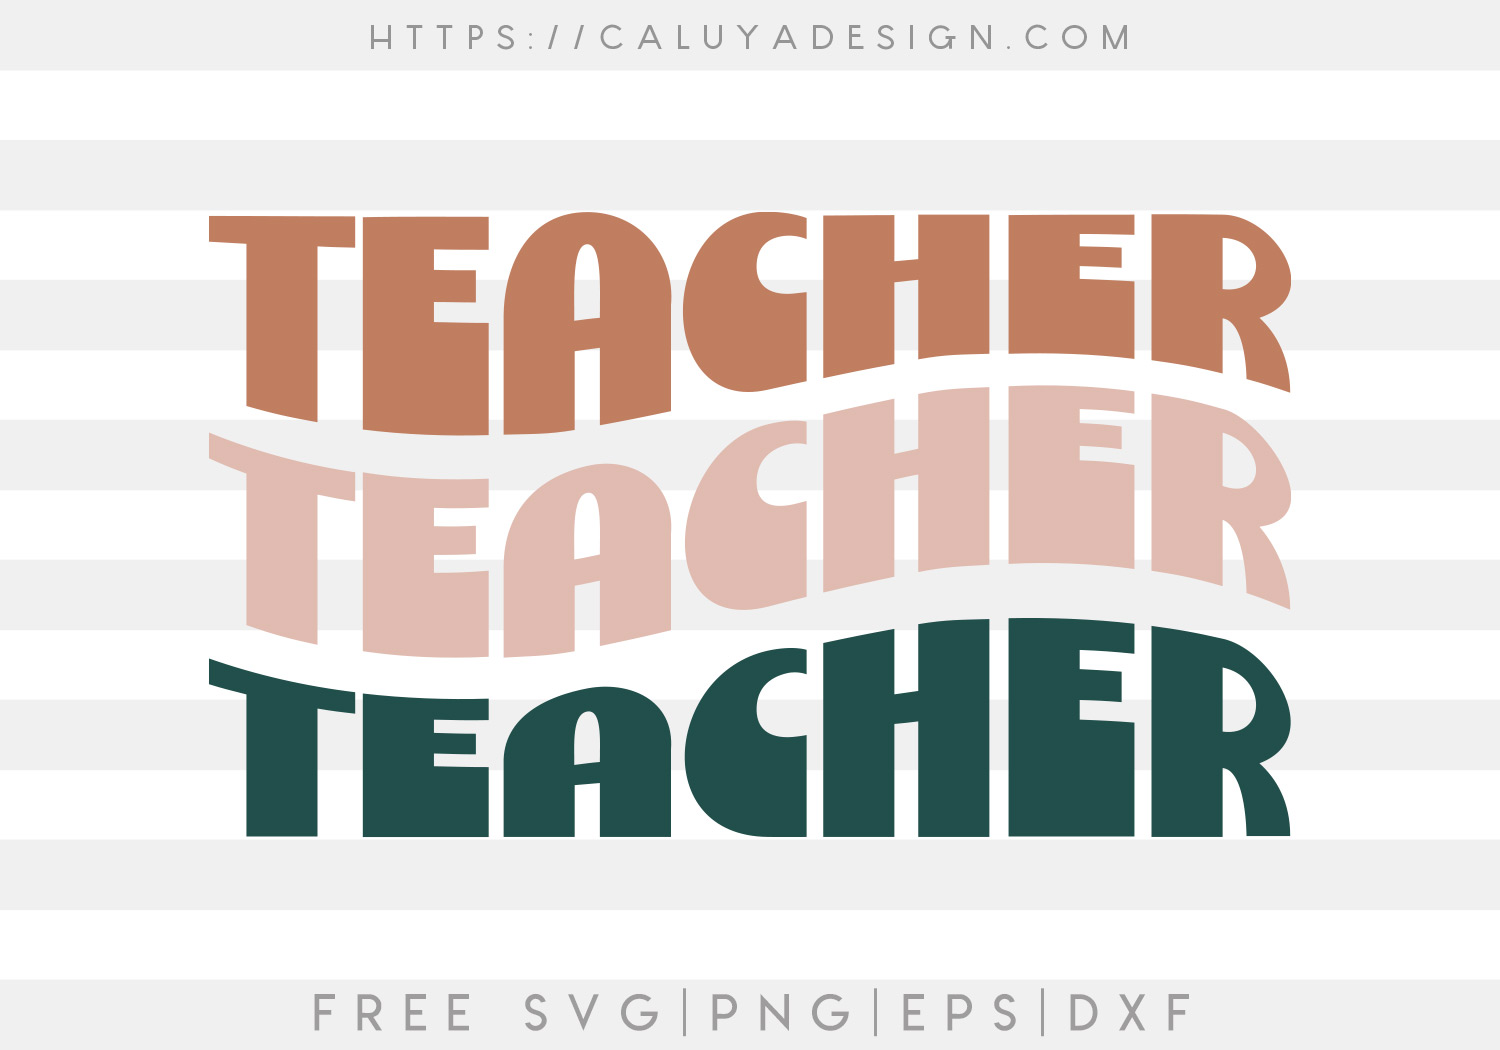 Download Free Retro Teacher SVG - CALUYA DESIGN